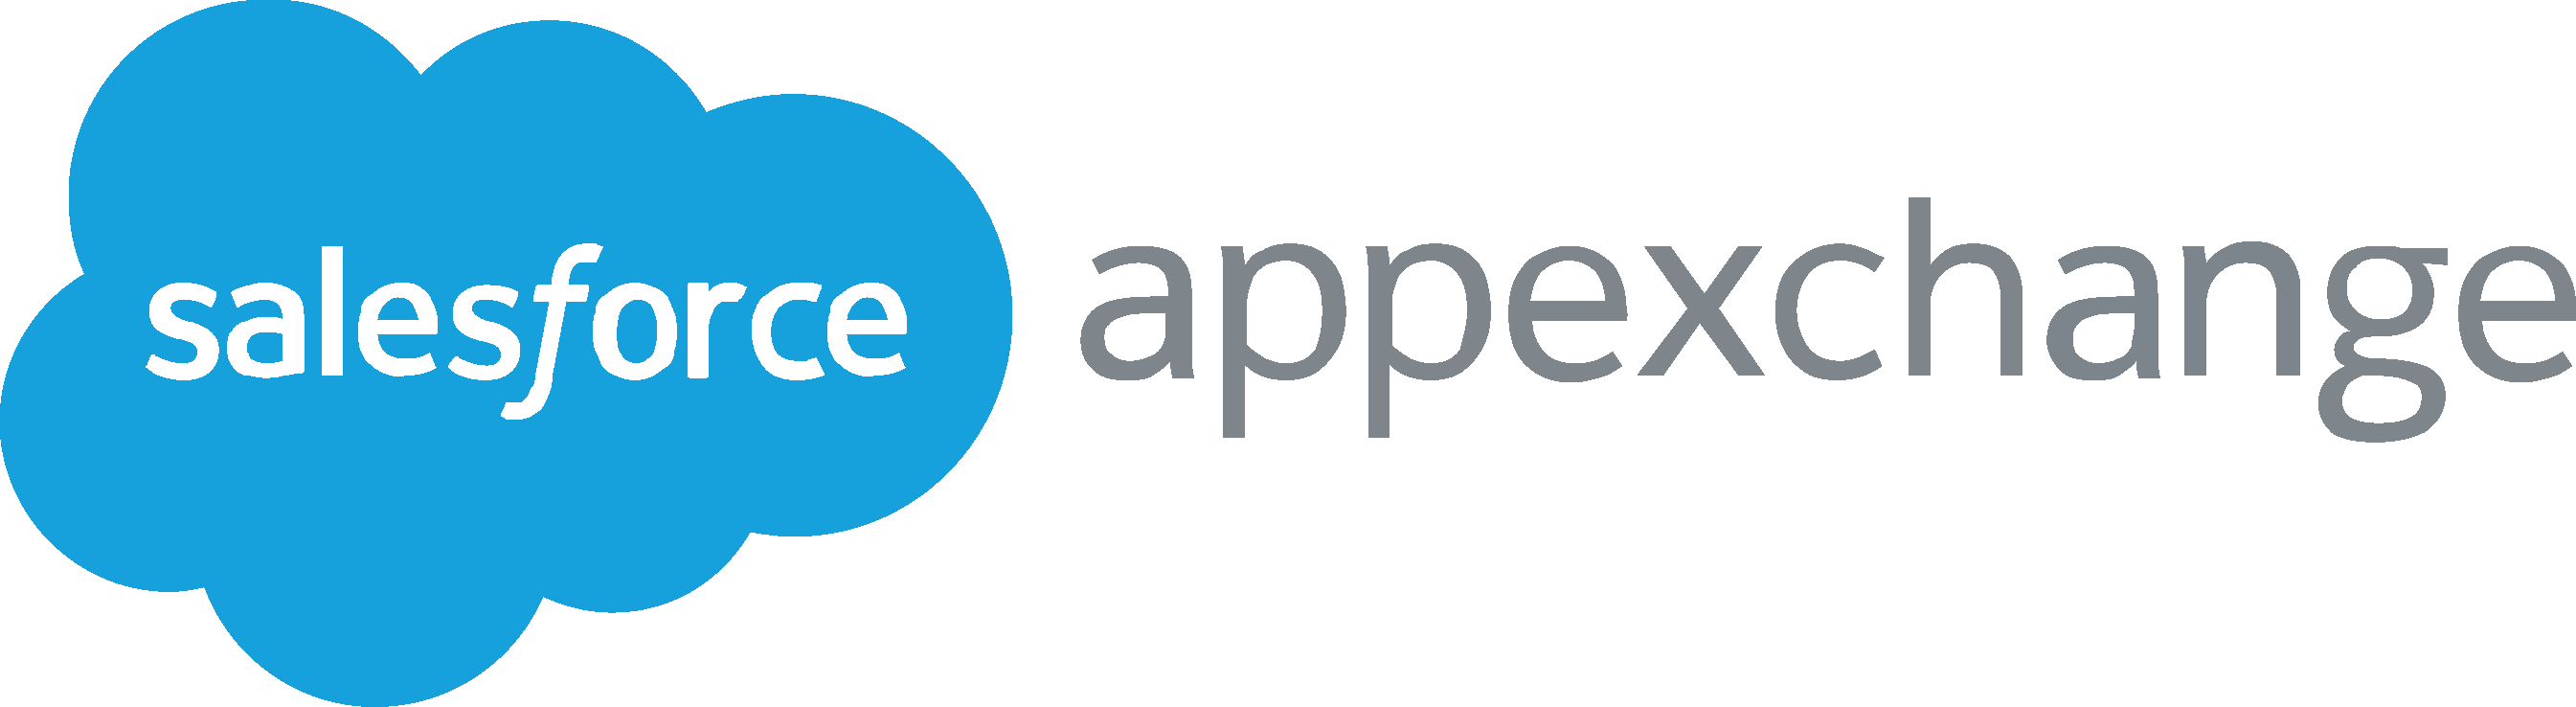 Salesforce Appexchange Logo png